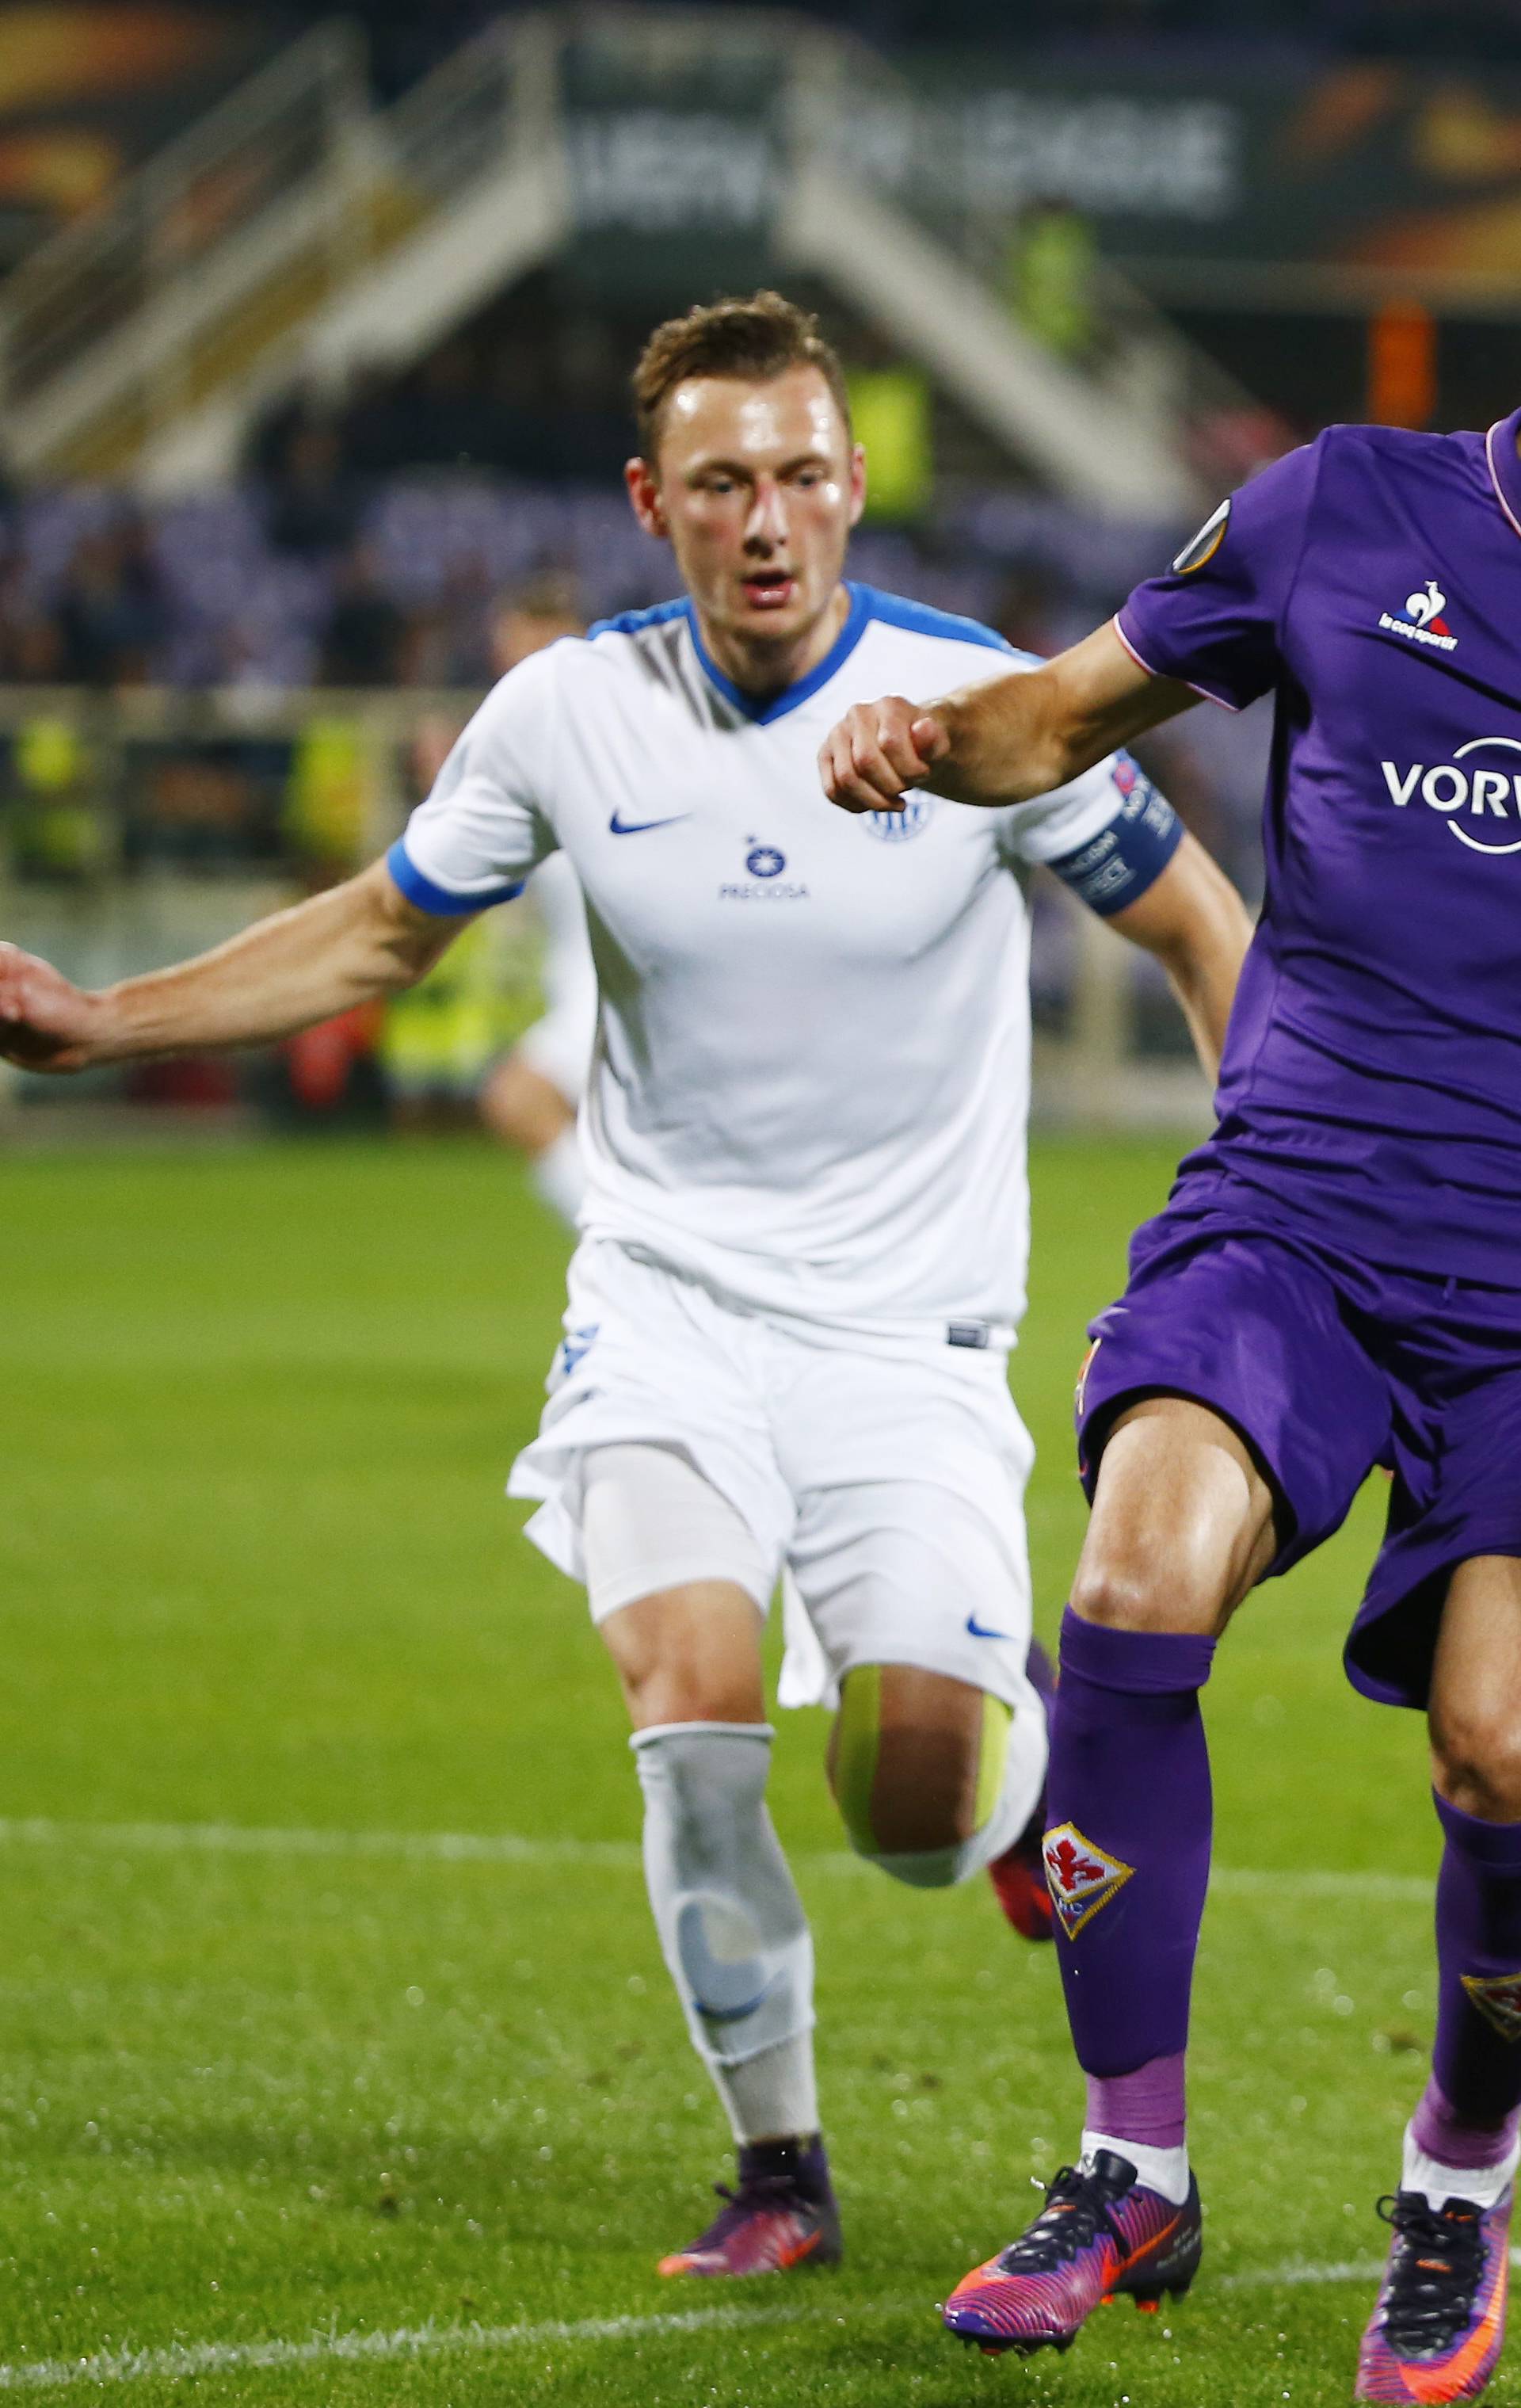 Fiorentina's Nikola Kalinic in action with Slovan Liberec's